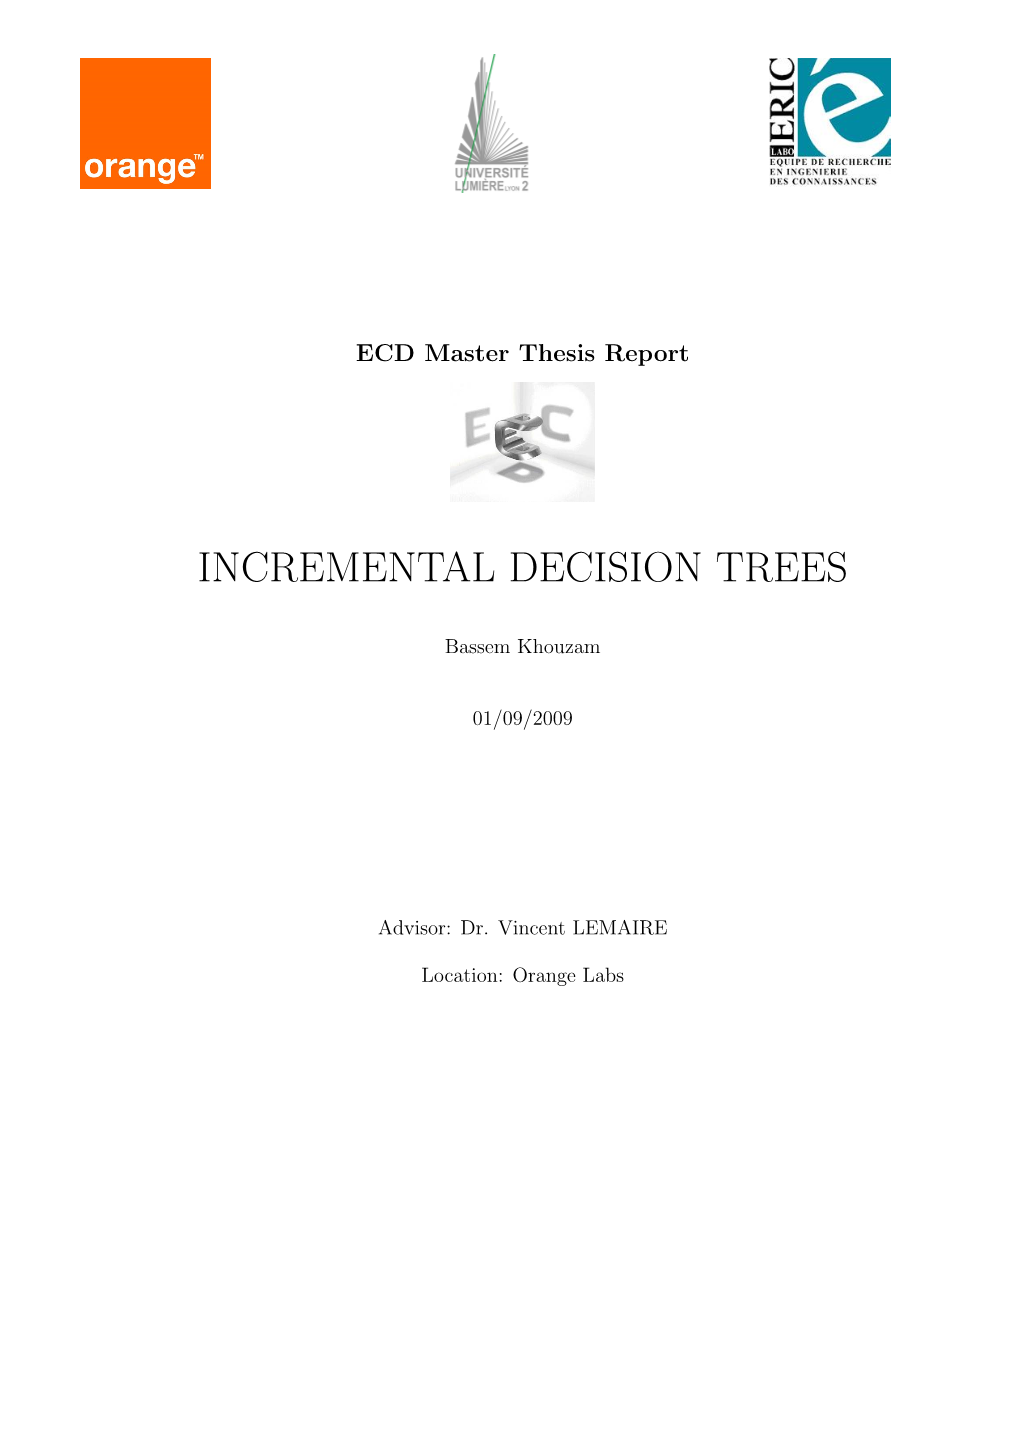 Incremental Decision Trees